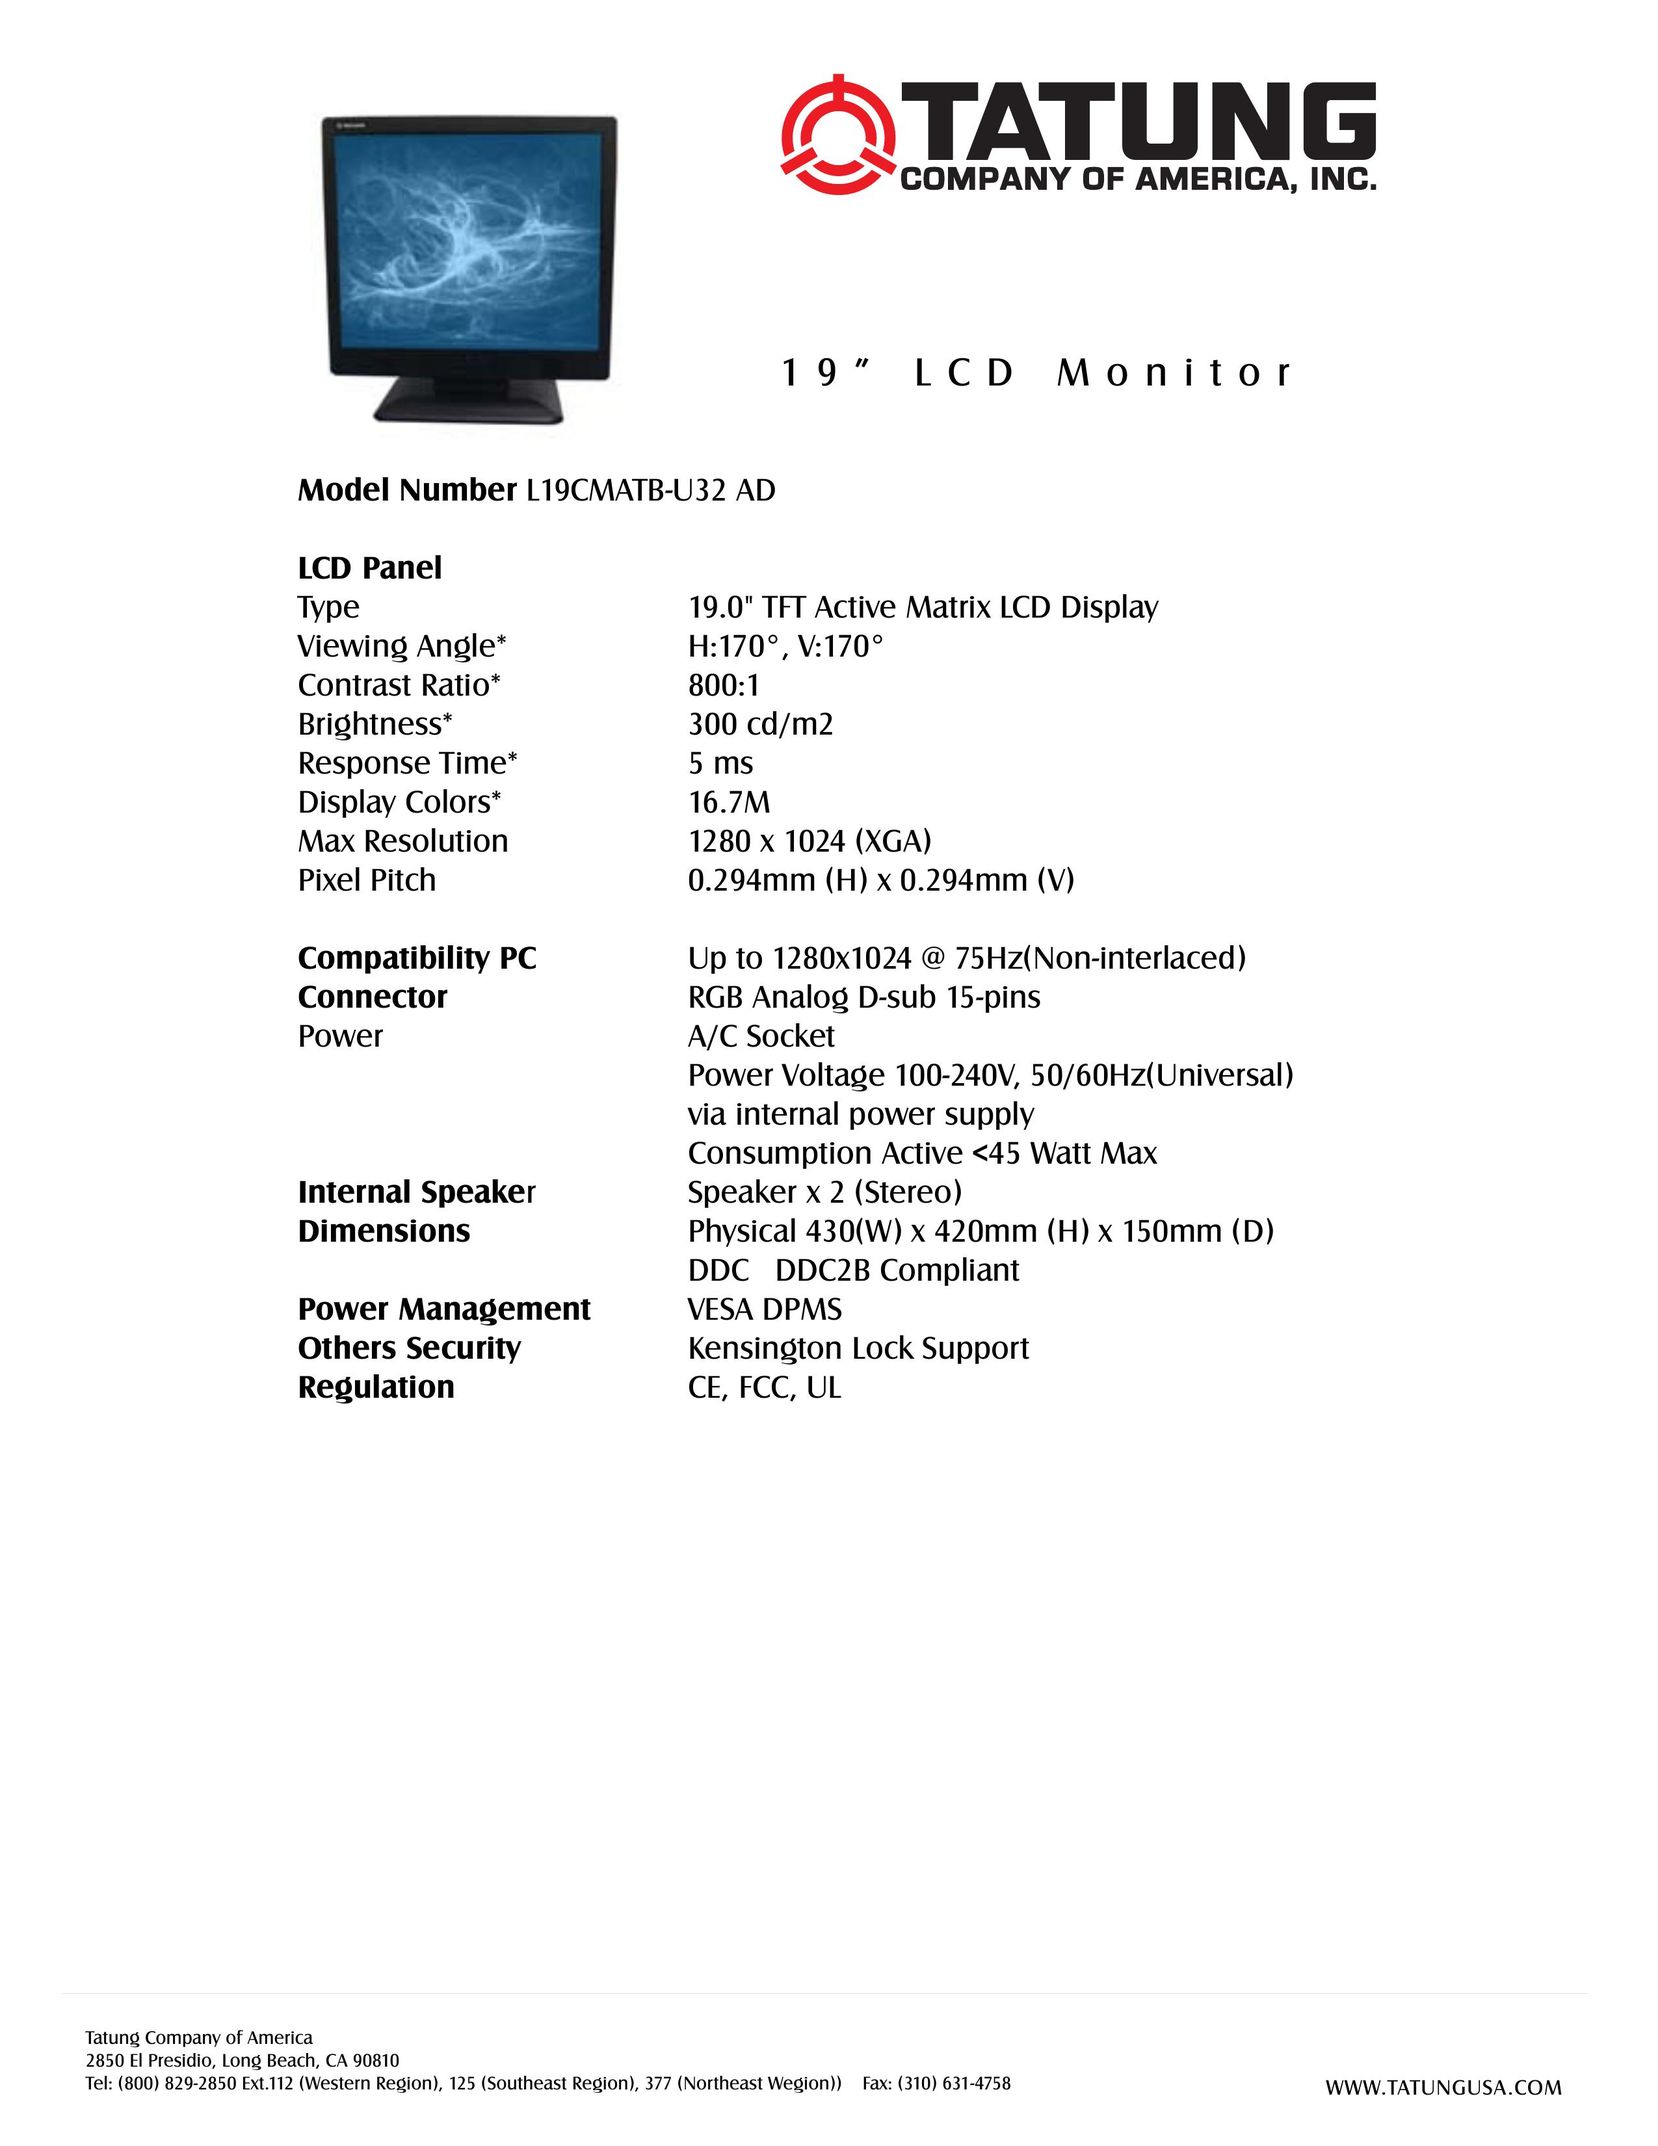 Tatung L19CMATB-U32 AD Computer Monitor User Manual